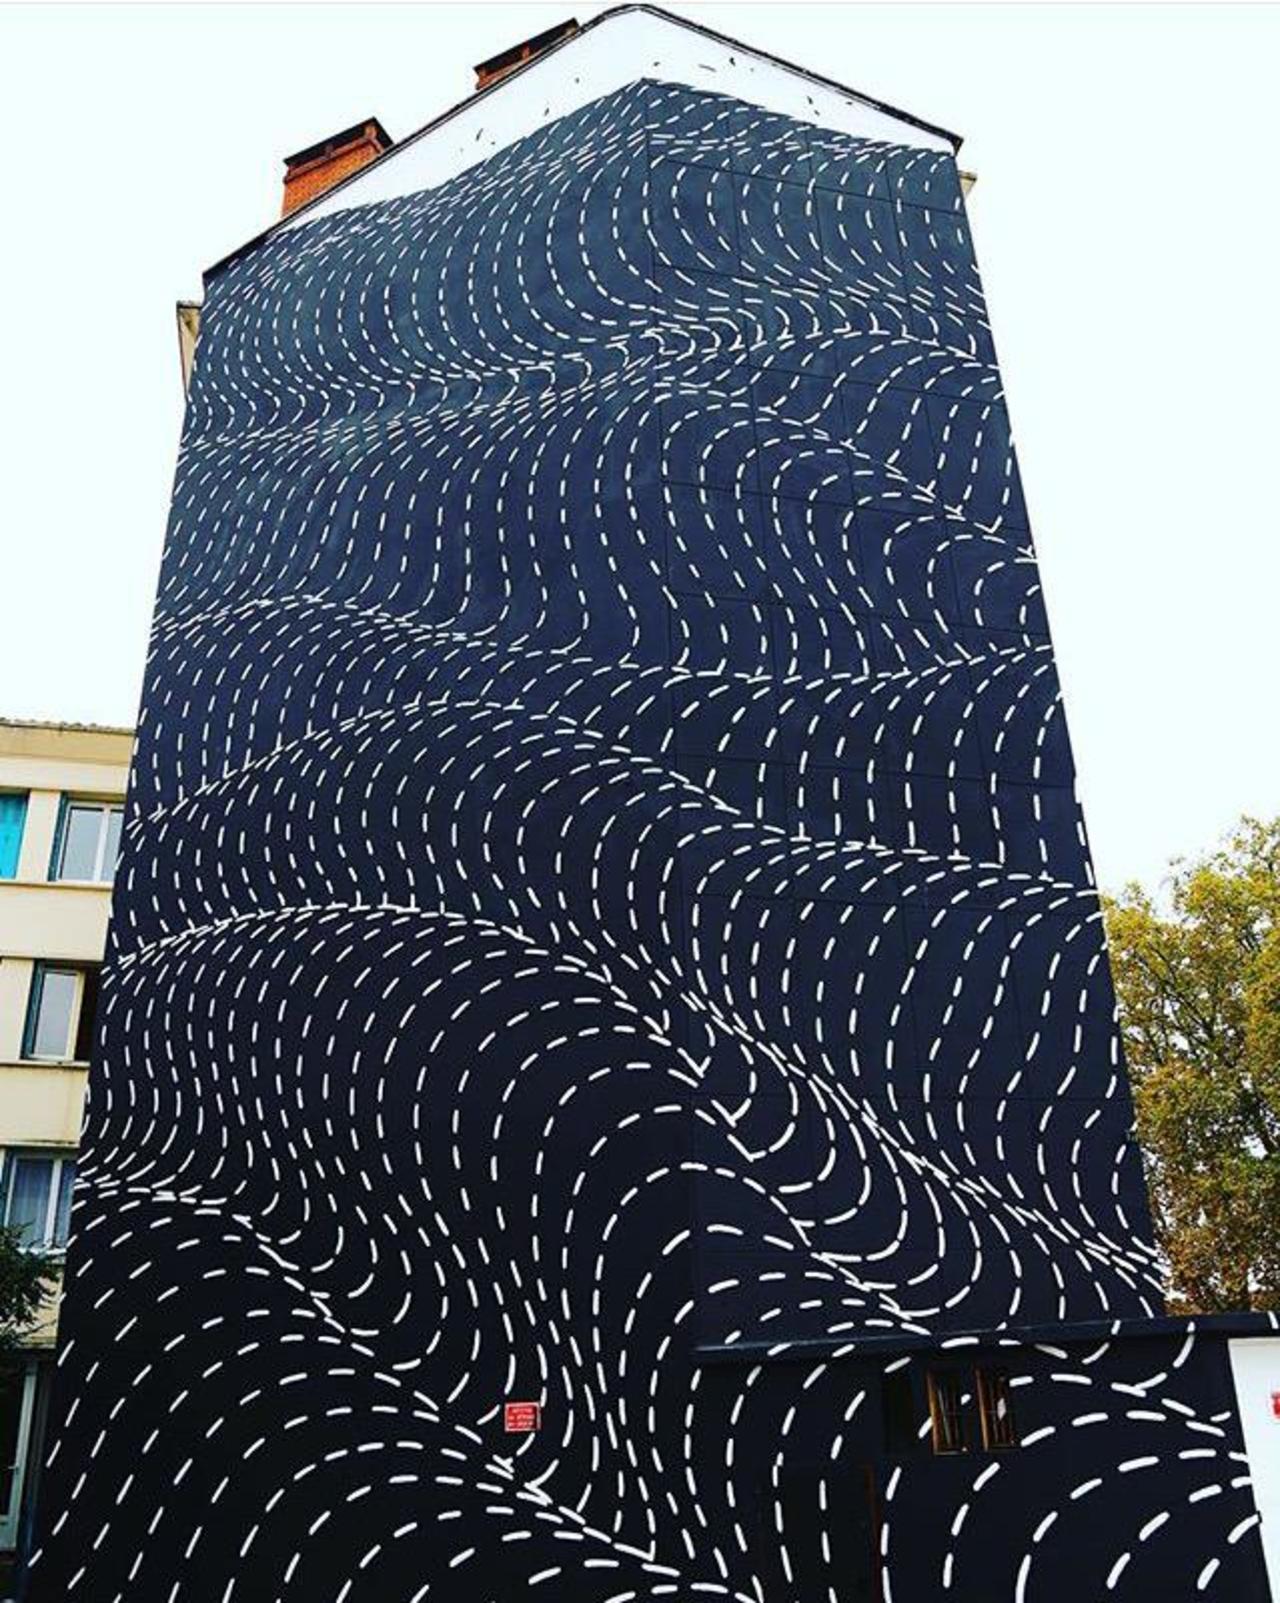 New Street Art by Brendan Monroe's for WOPS ! Festival in Toulouse, France. 

#art #graffiti #mural #streetart https://t.co/RbekNiBDYW goo…